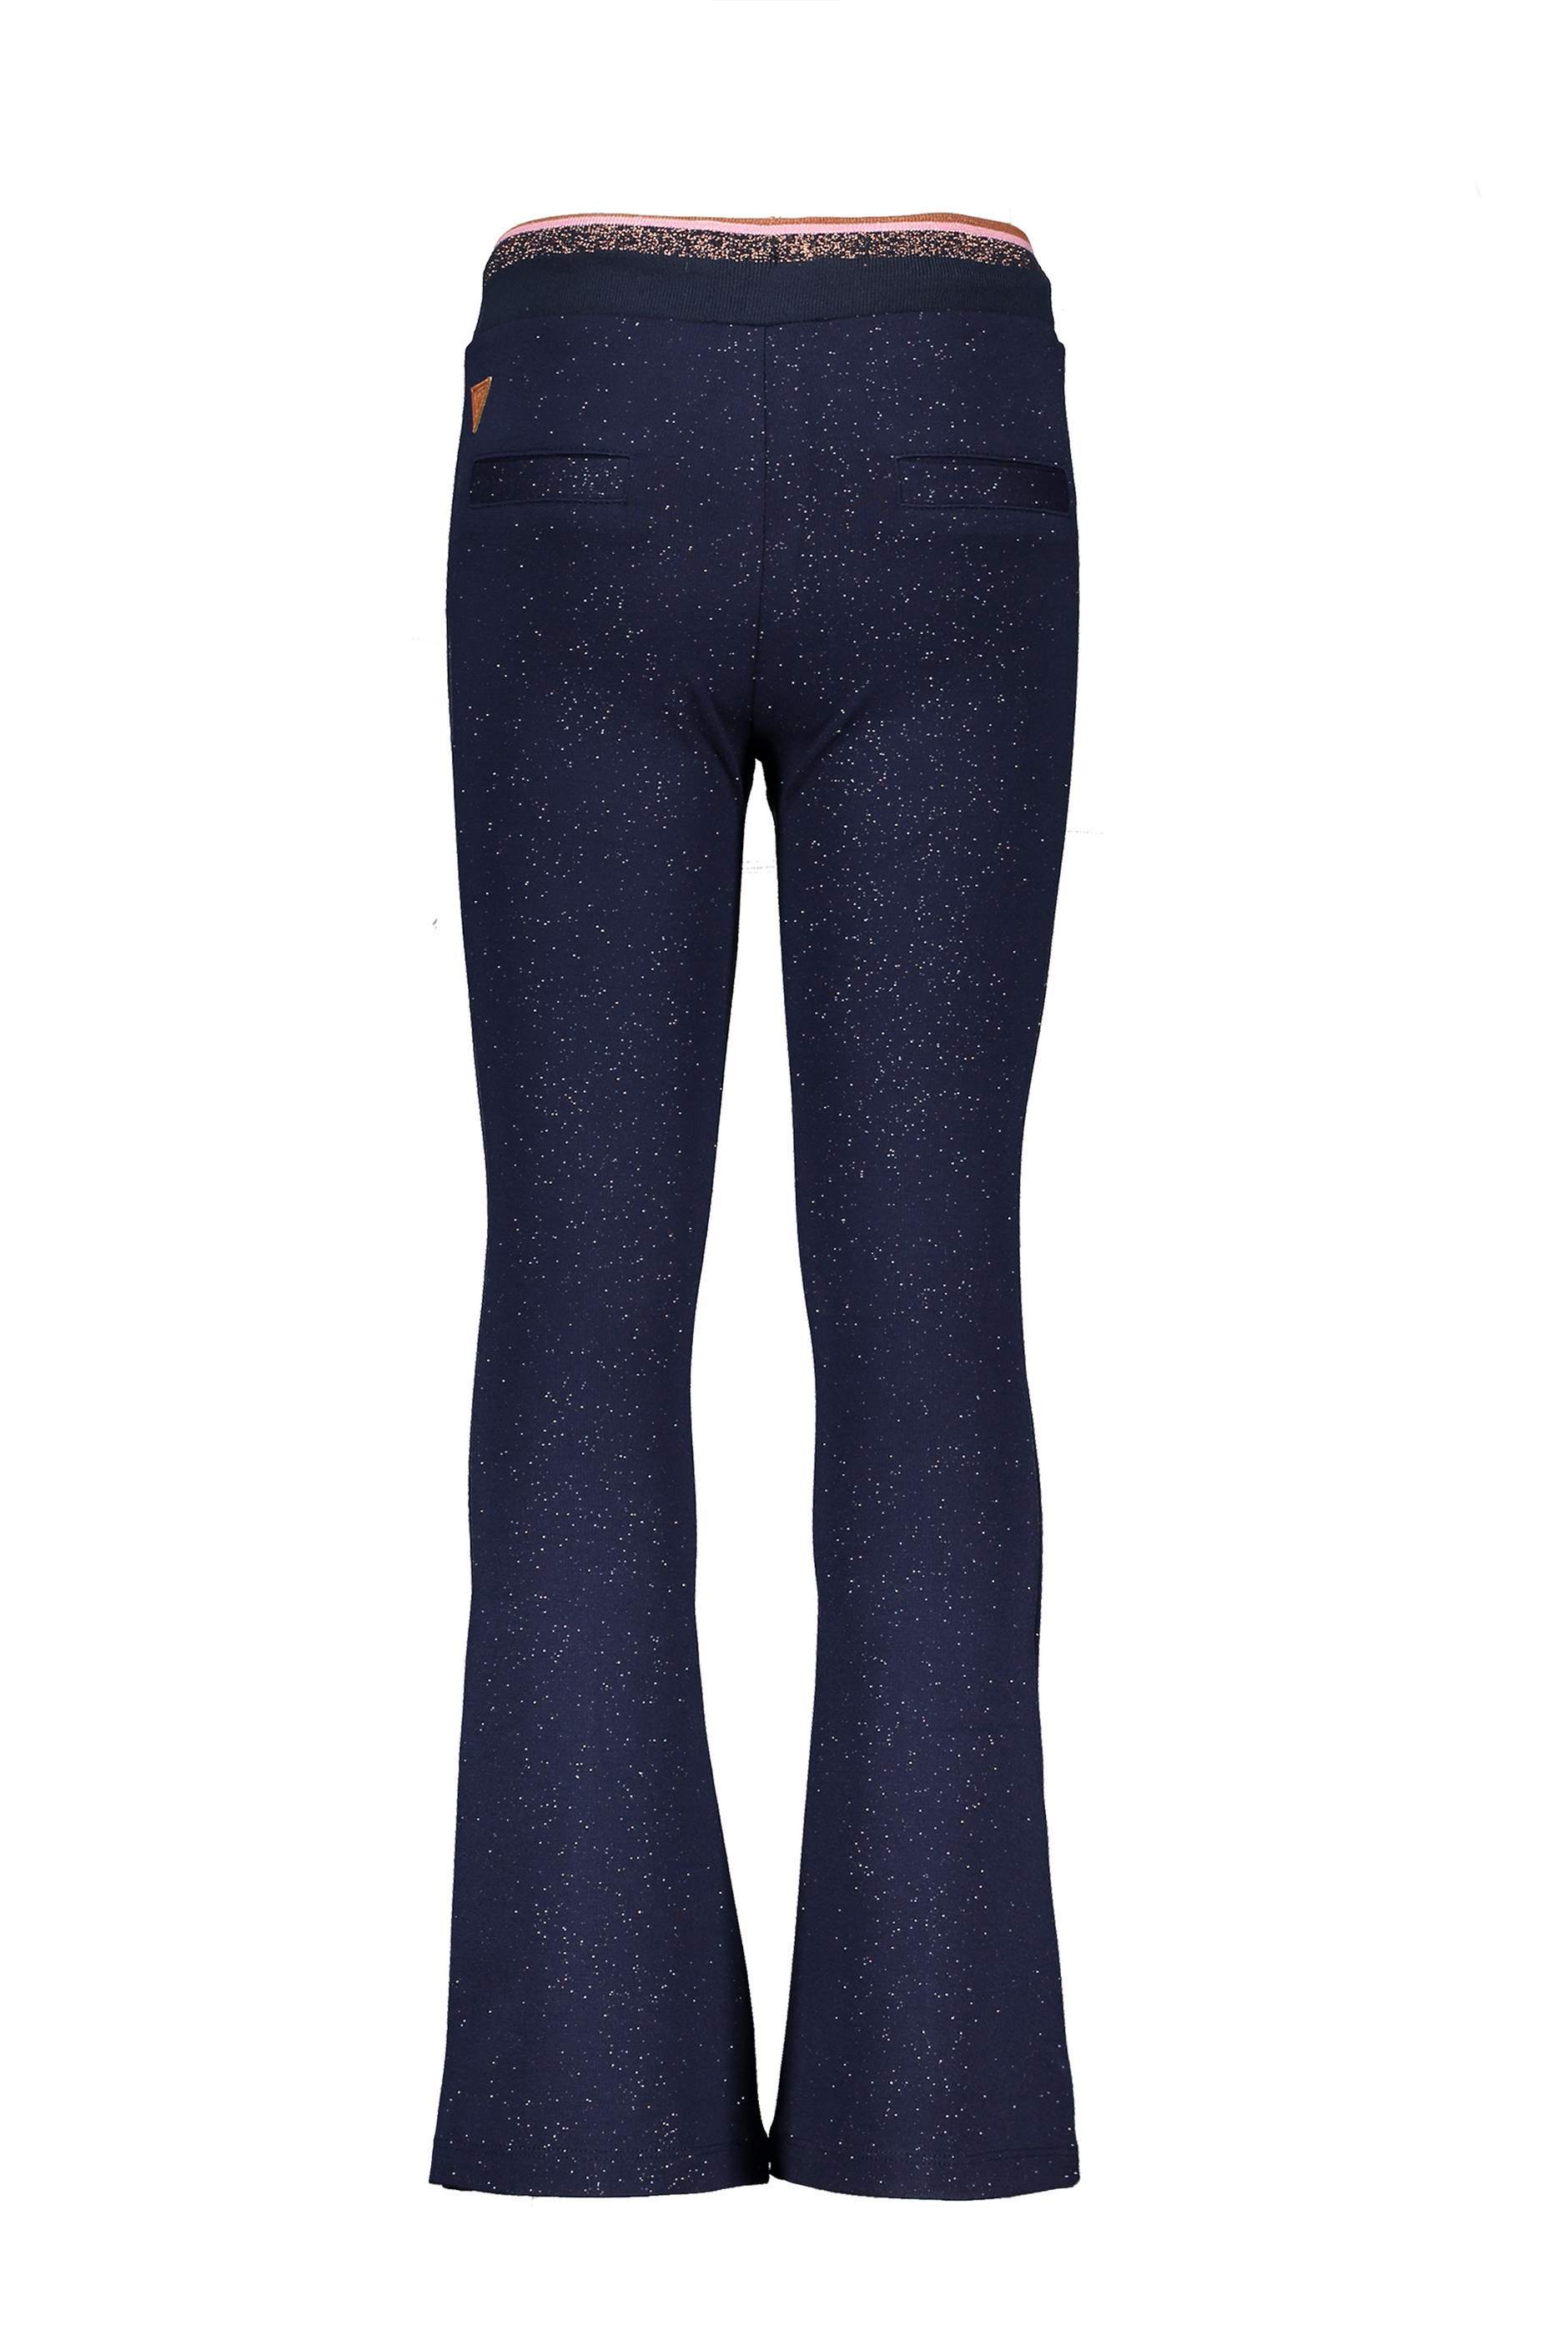 Meisjes Sahara flared pants with fancy rib and cord on waistband van NoNo in de kleur Navy Blazer in maat 146/152.